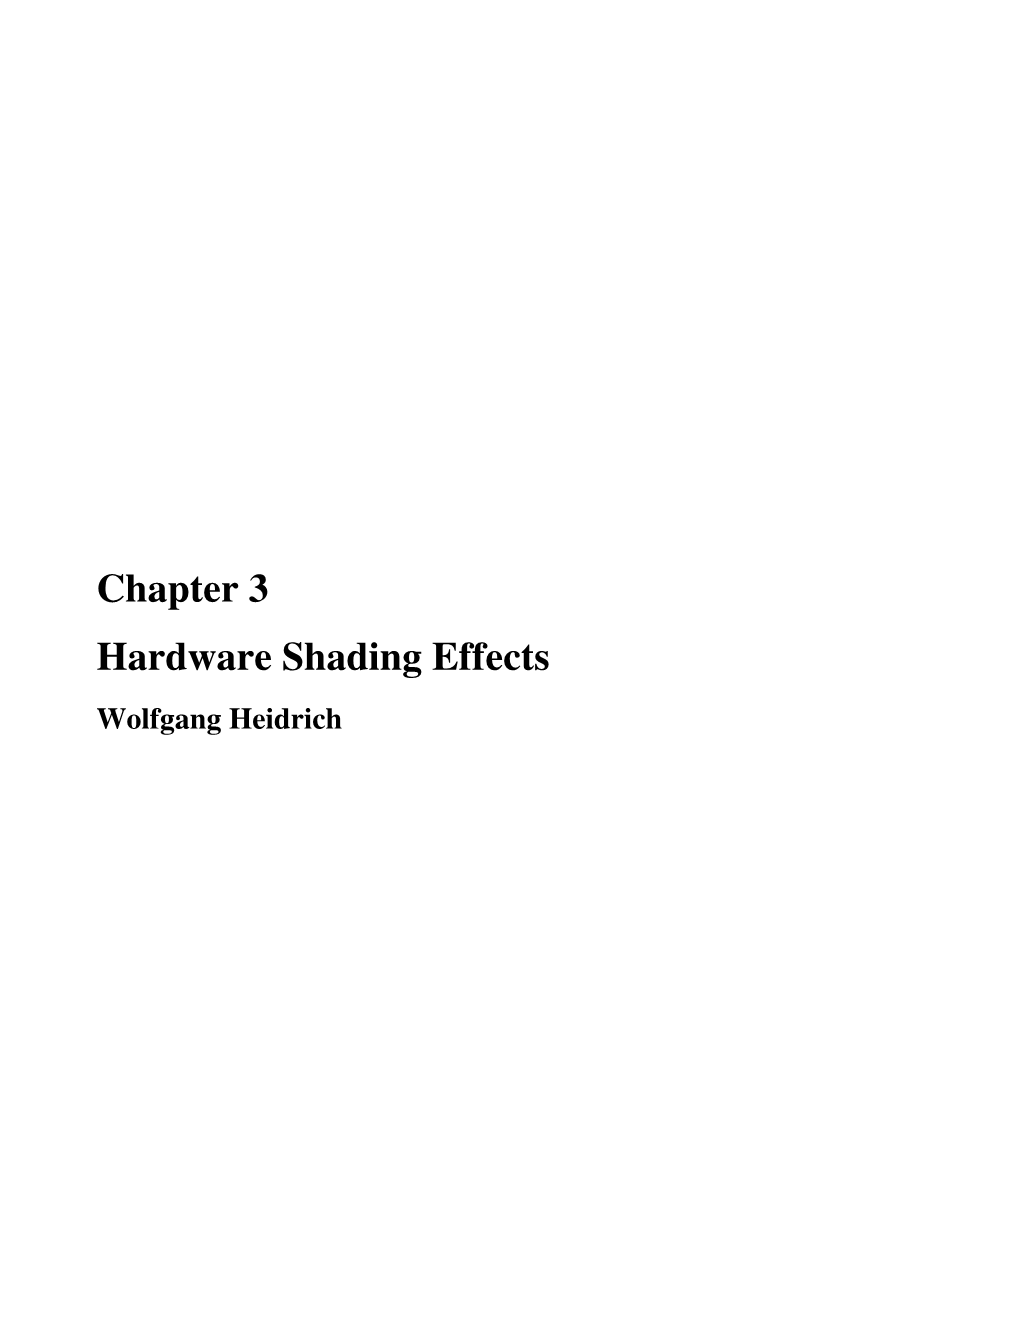 Chapter 3: Hardware Shading Effects